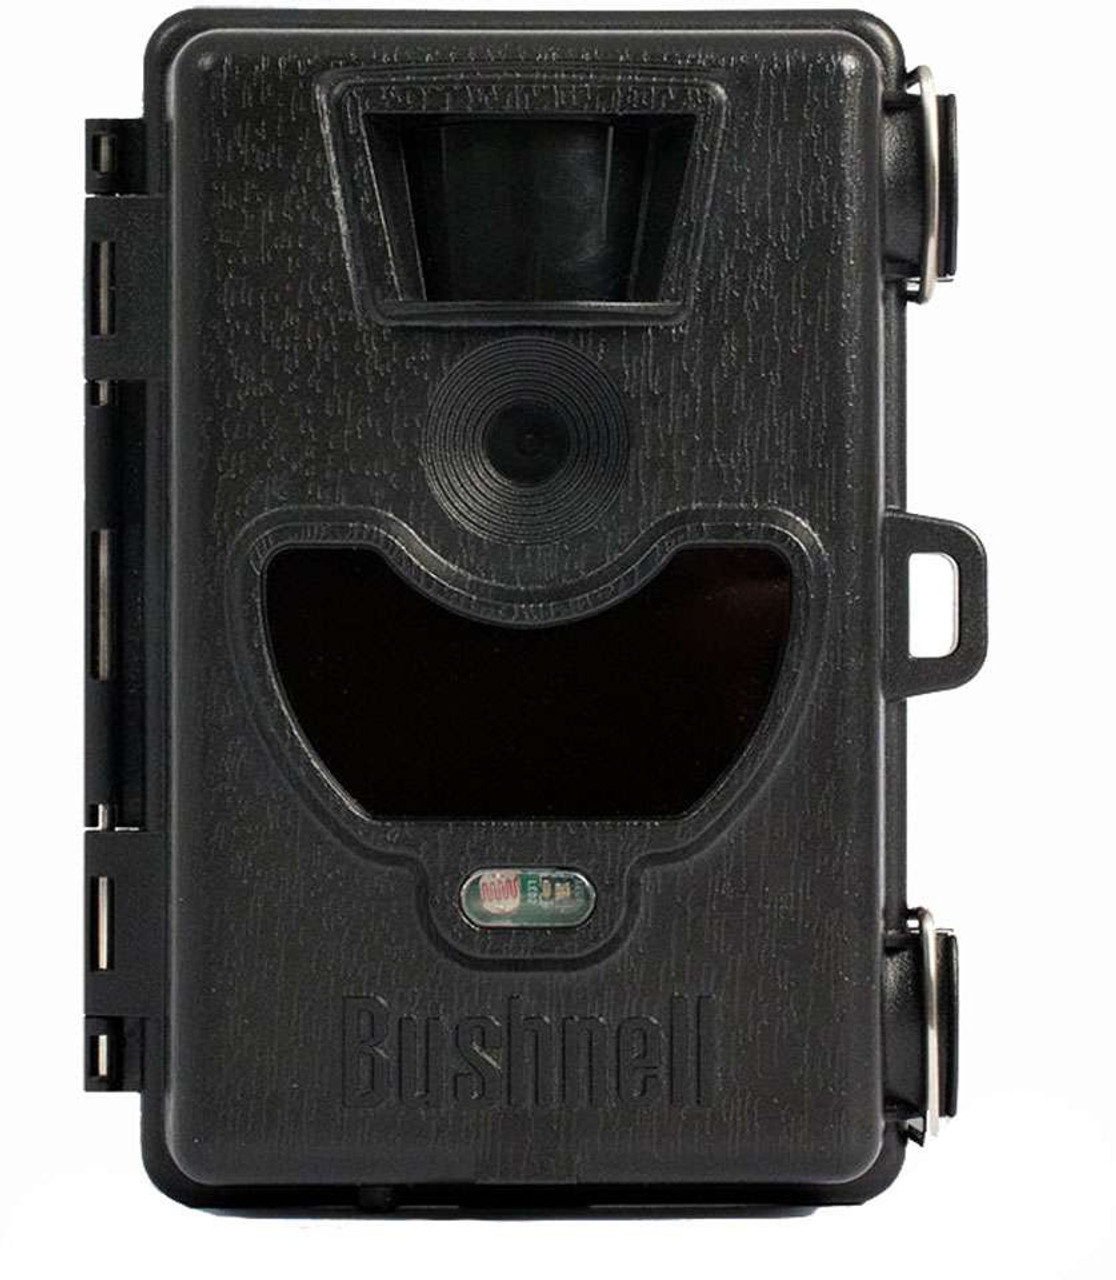 Bushnell 119514C No Glow Surveillance Camera